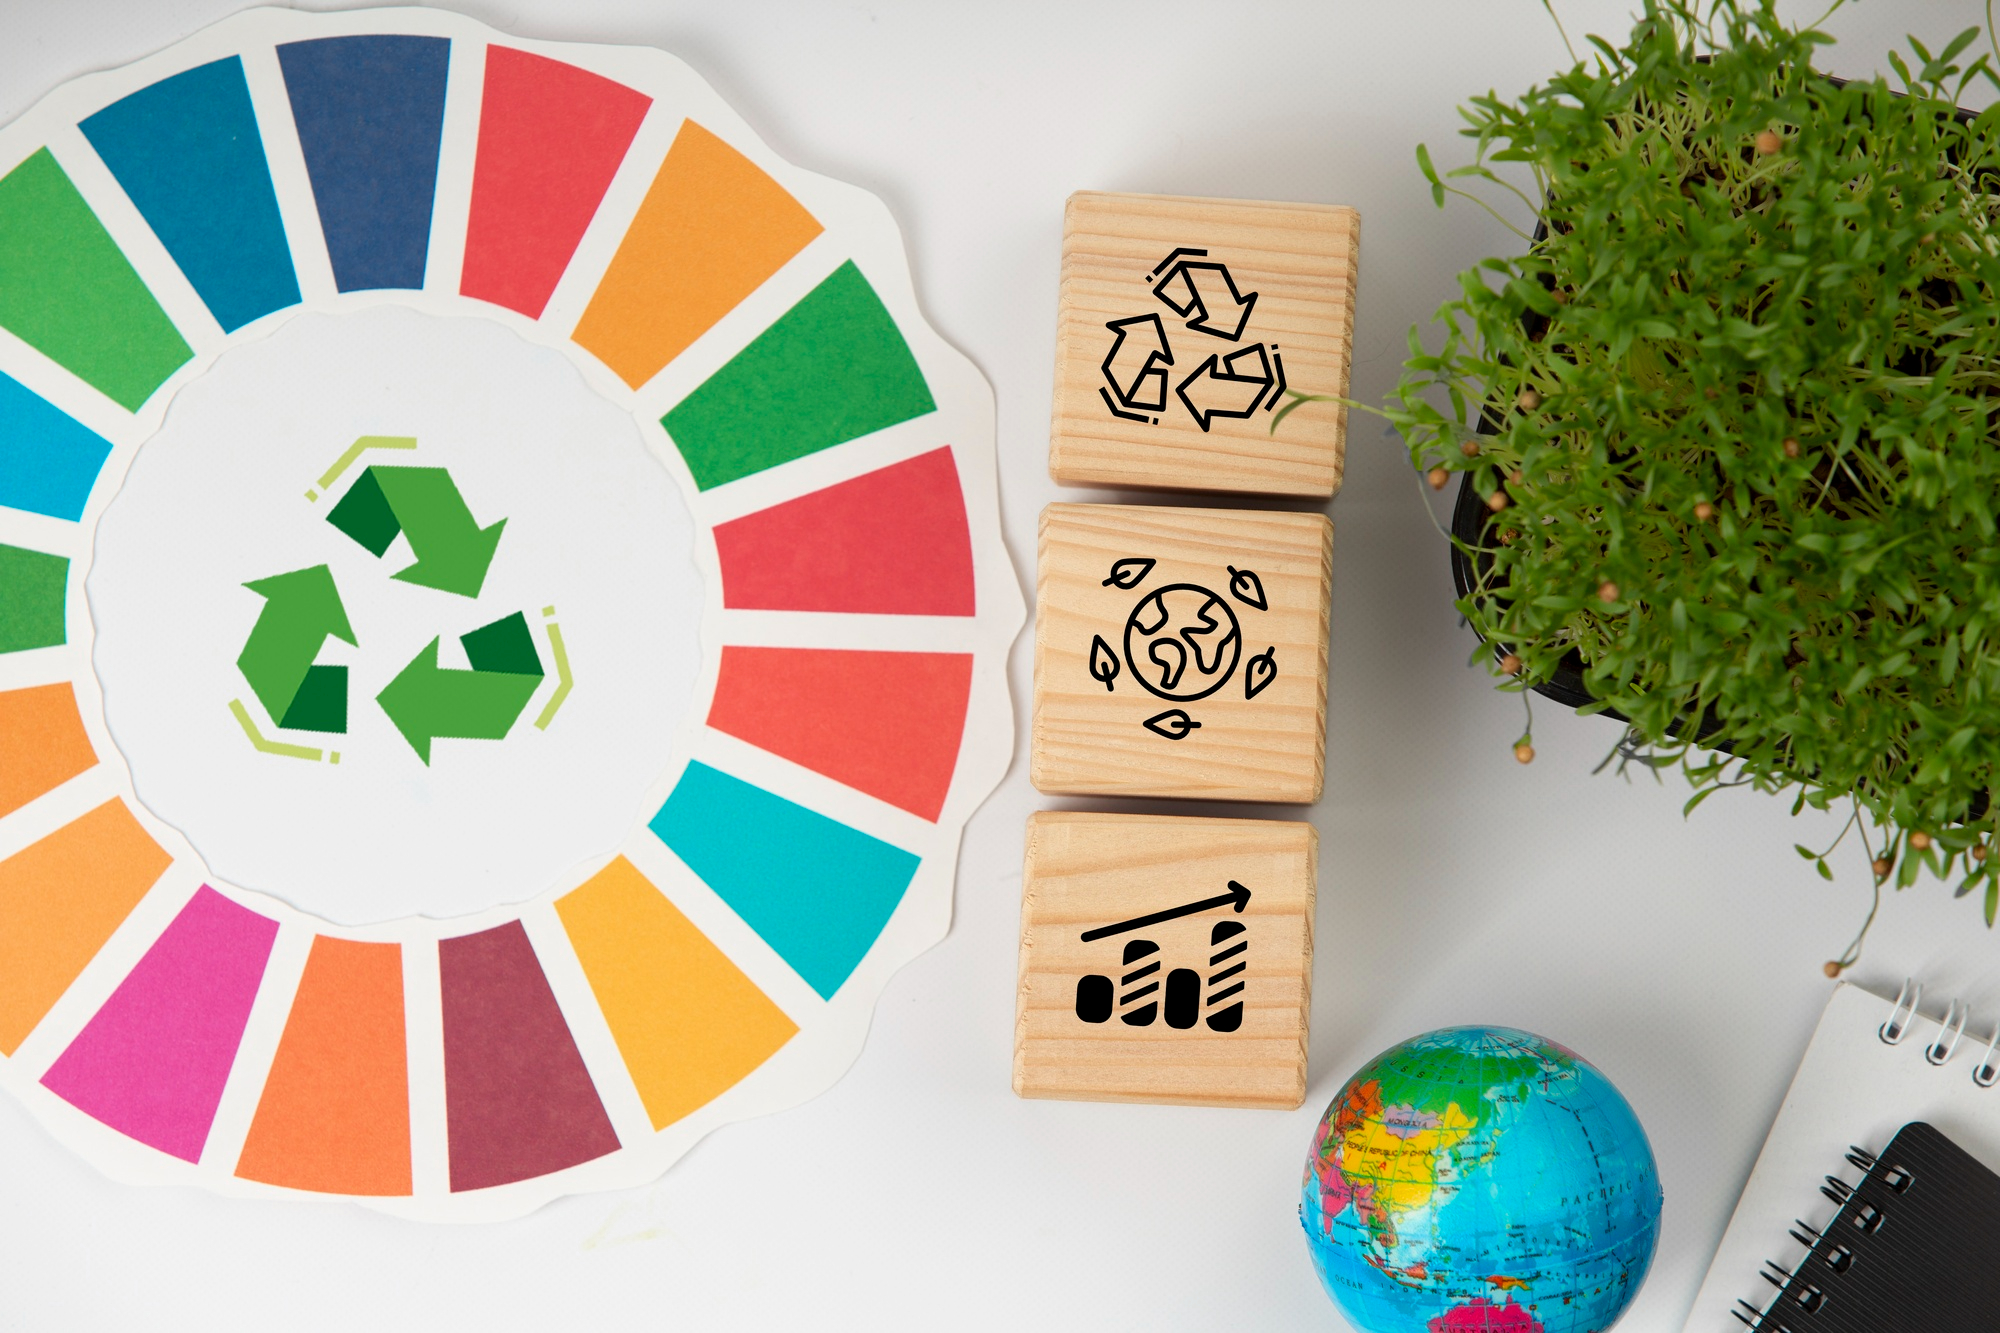 Sustainable Development Goals (SDGs) Investing: Aligning Profit with Purpose